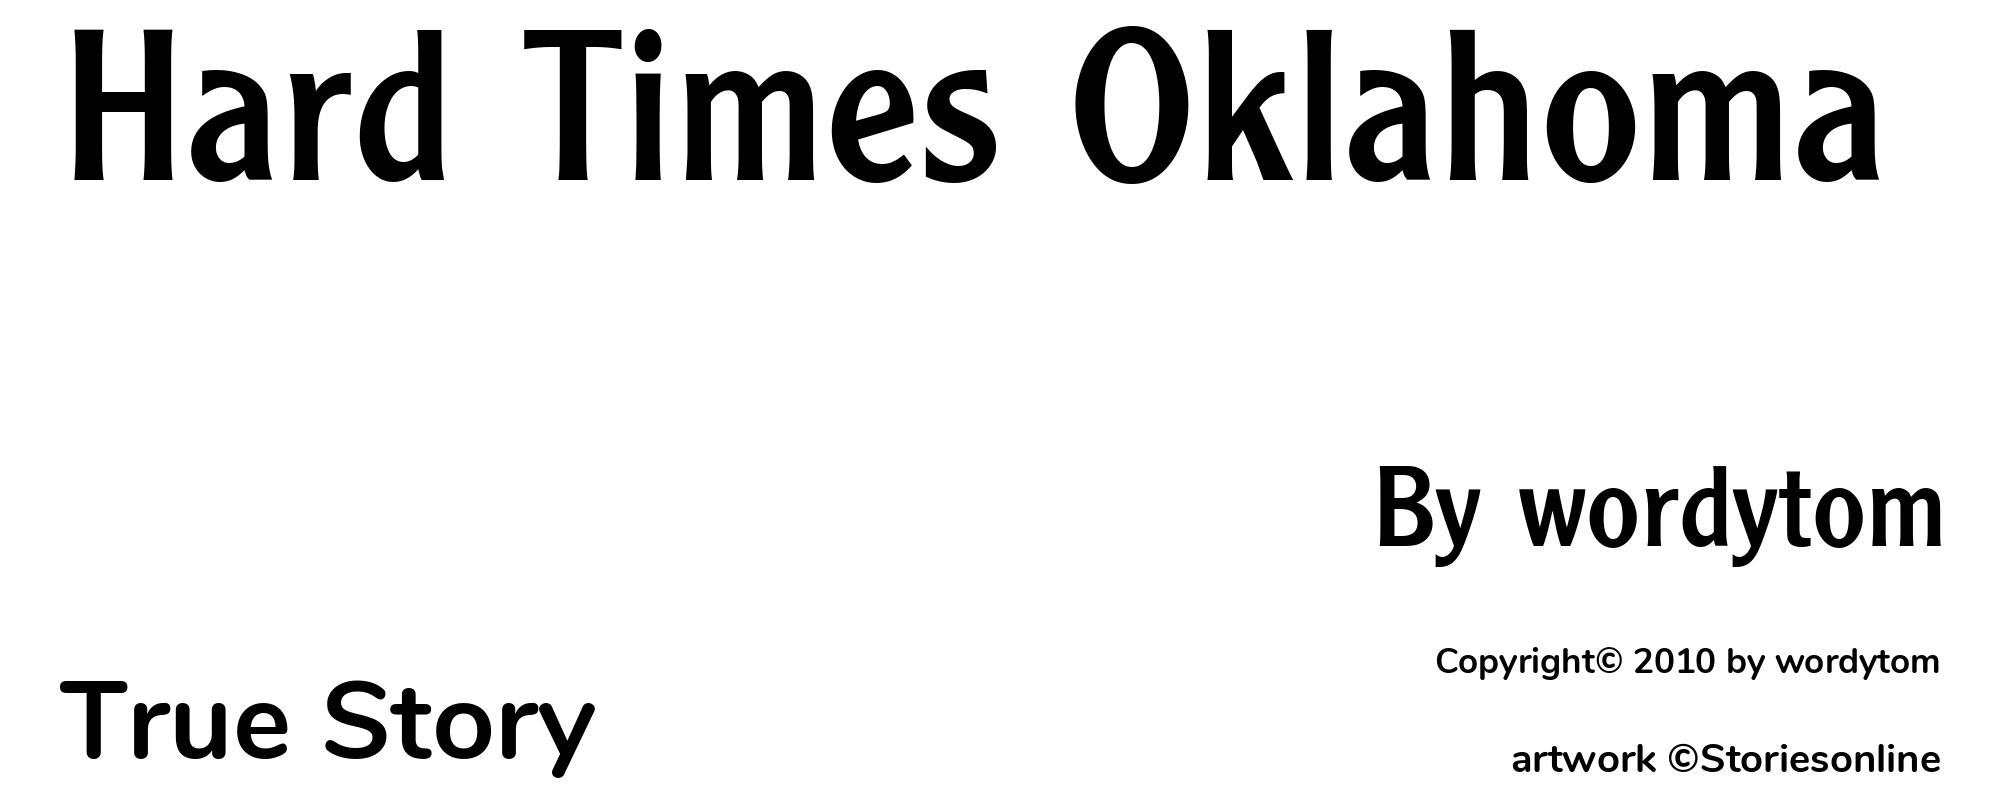 Hard Times Oklahoma - Cover